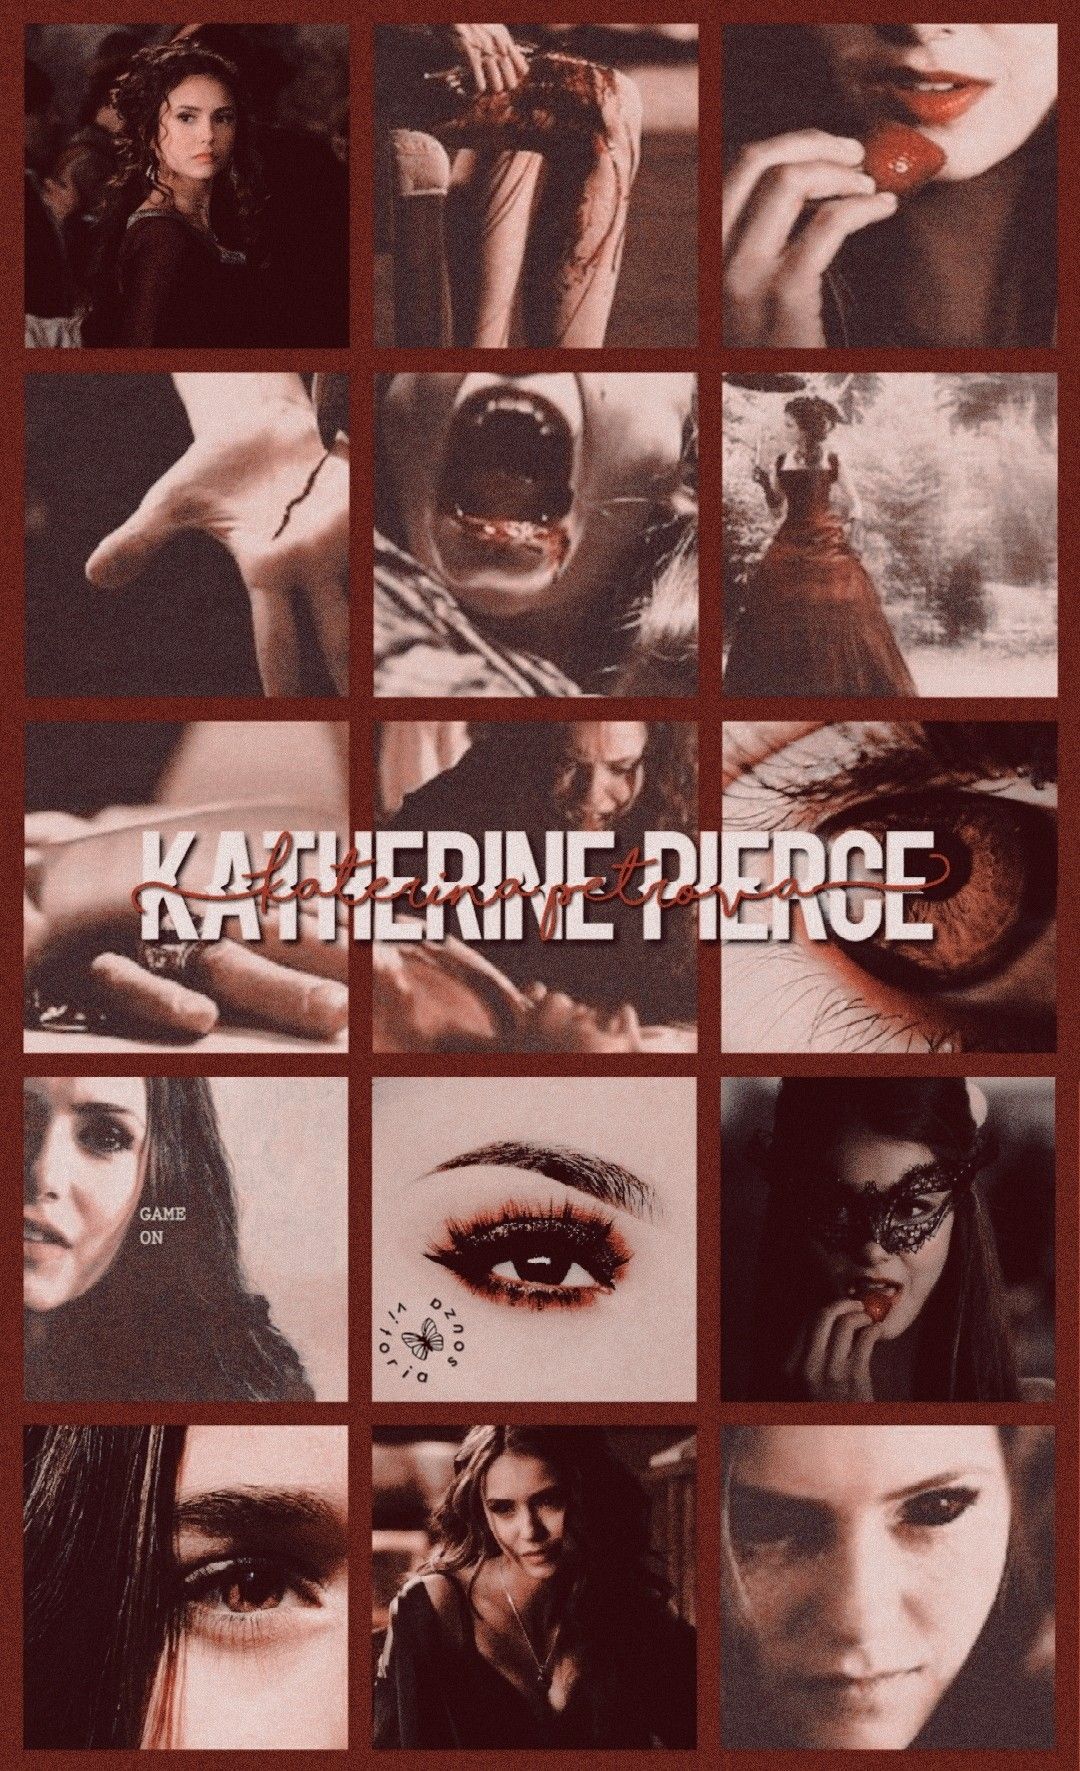 The Vampire Diaries. Vampire diaries wallpaper, Vampire diaries, Aesthetic collage